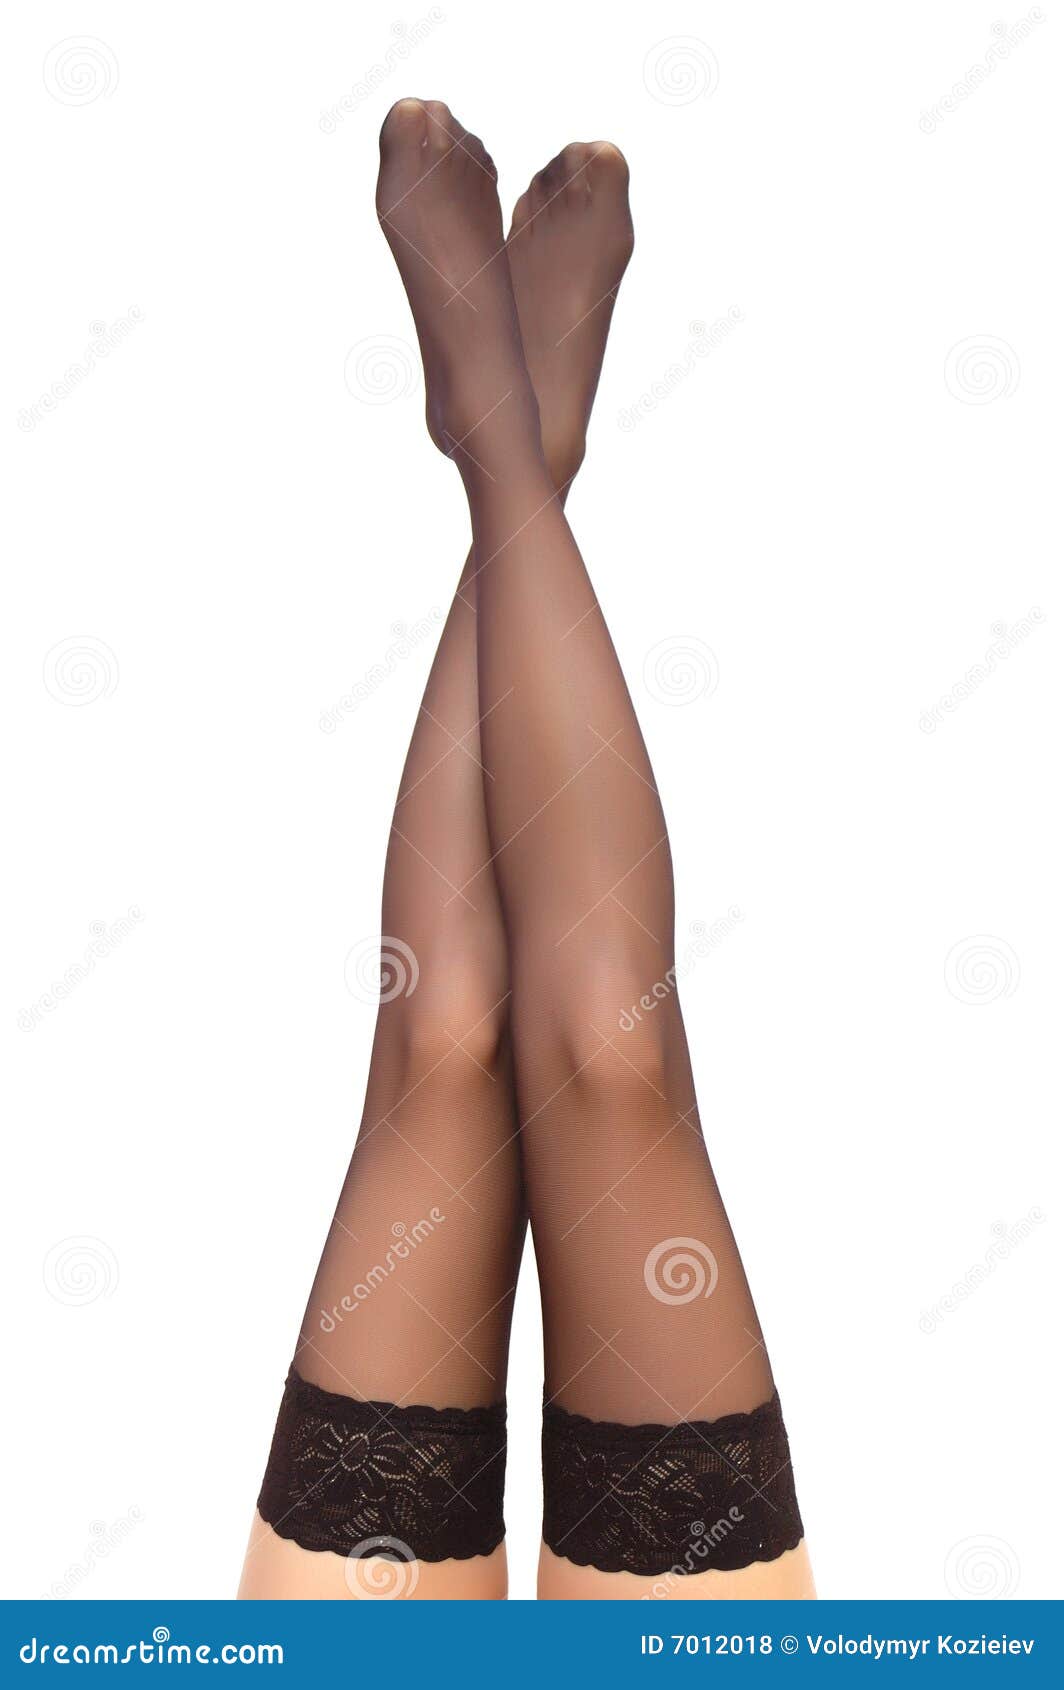 Legs In Stockings Pics